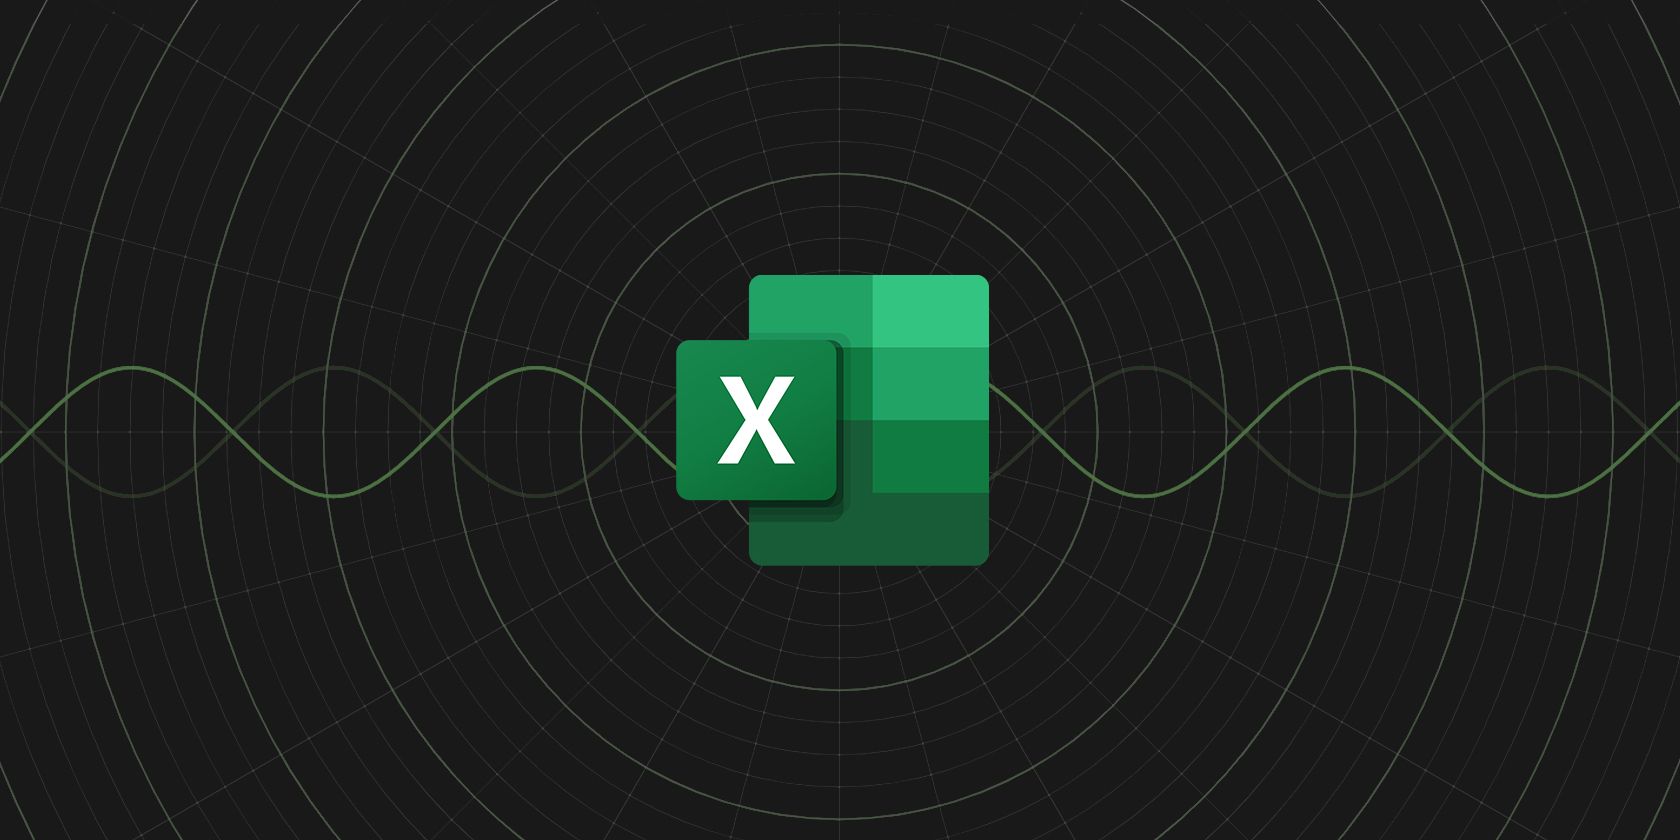 Excel logo on two trigonometric graphs.